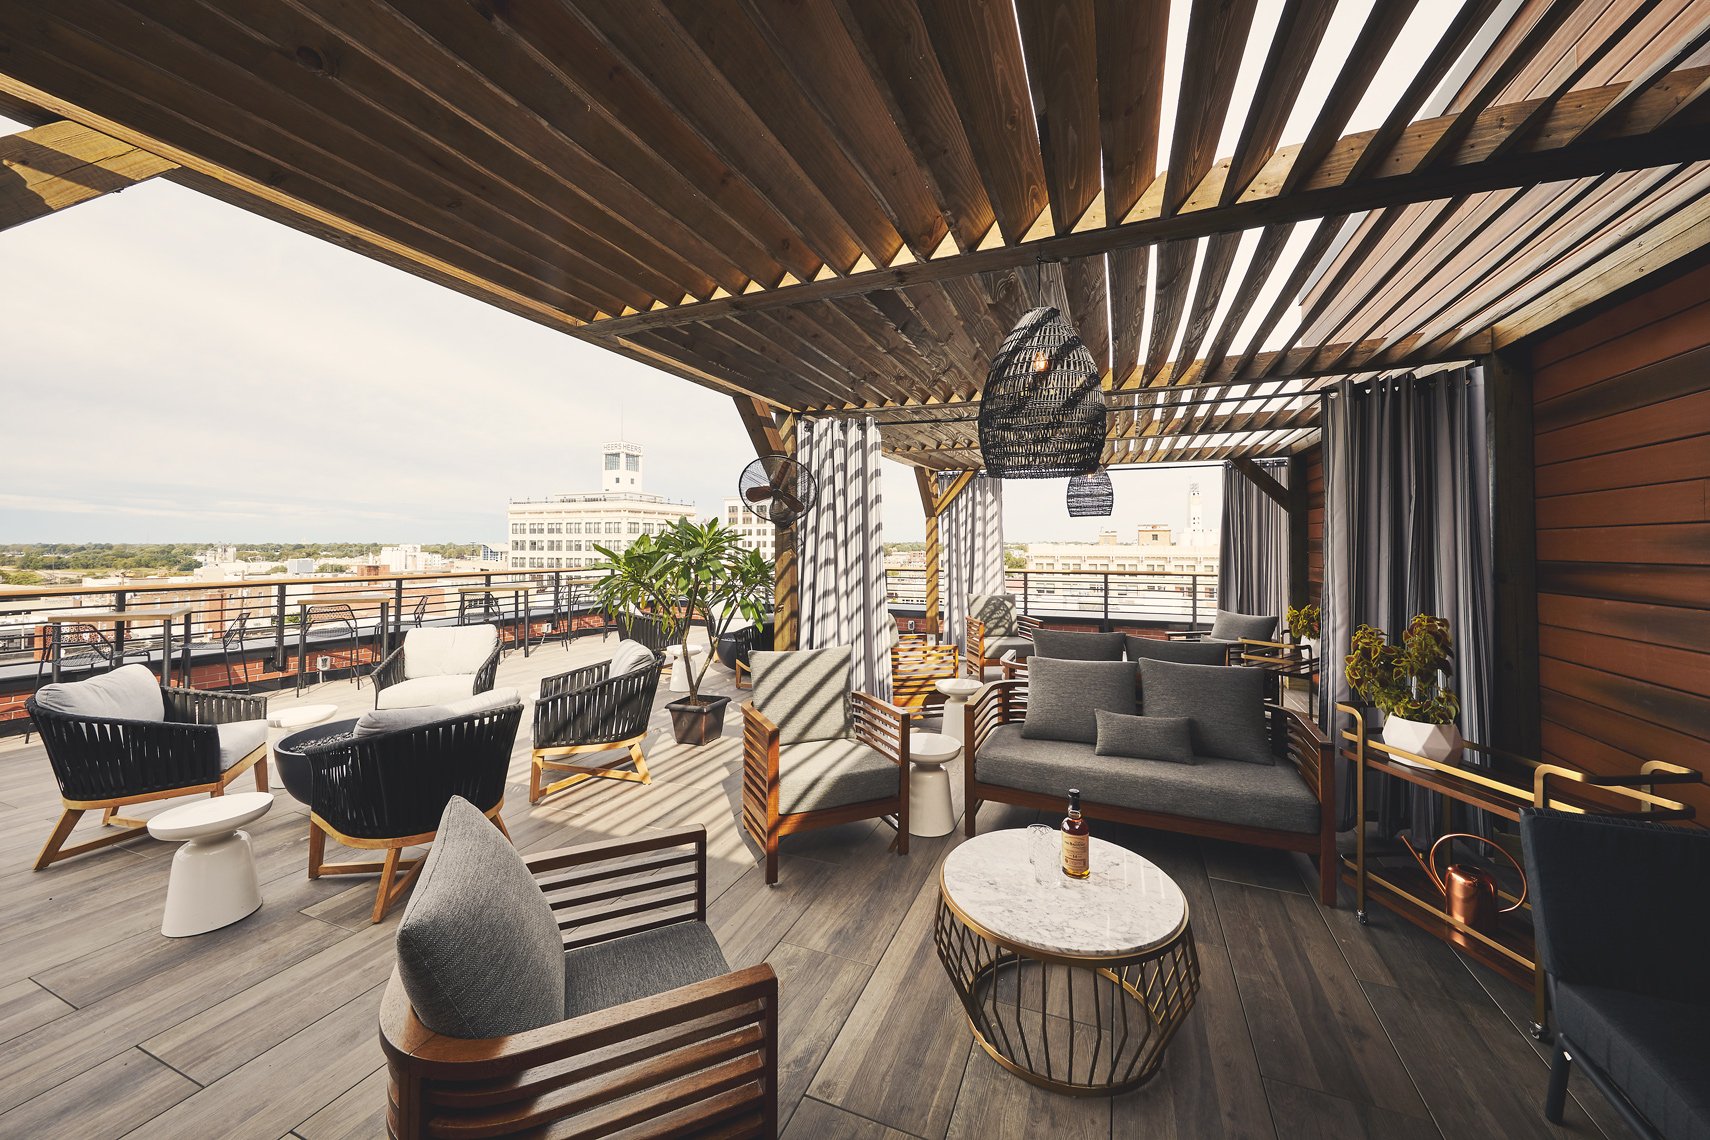 George Ferris Hotel Vandivort Vantage Rooftop Bar